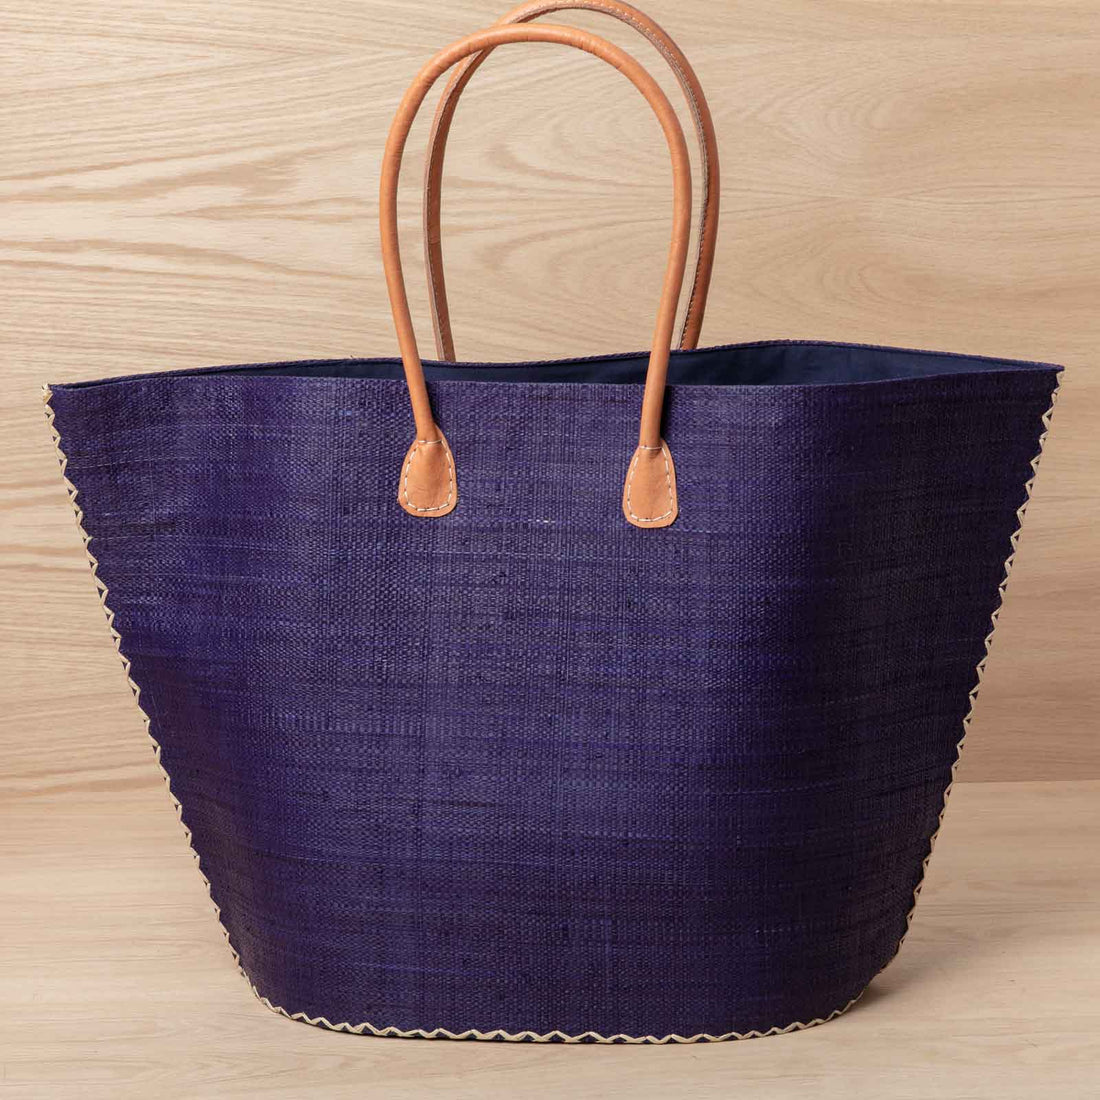 Raffia mini tote bag with leather handles